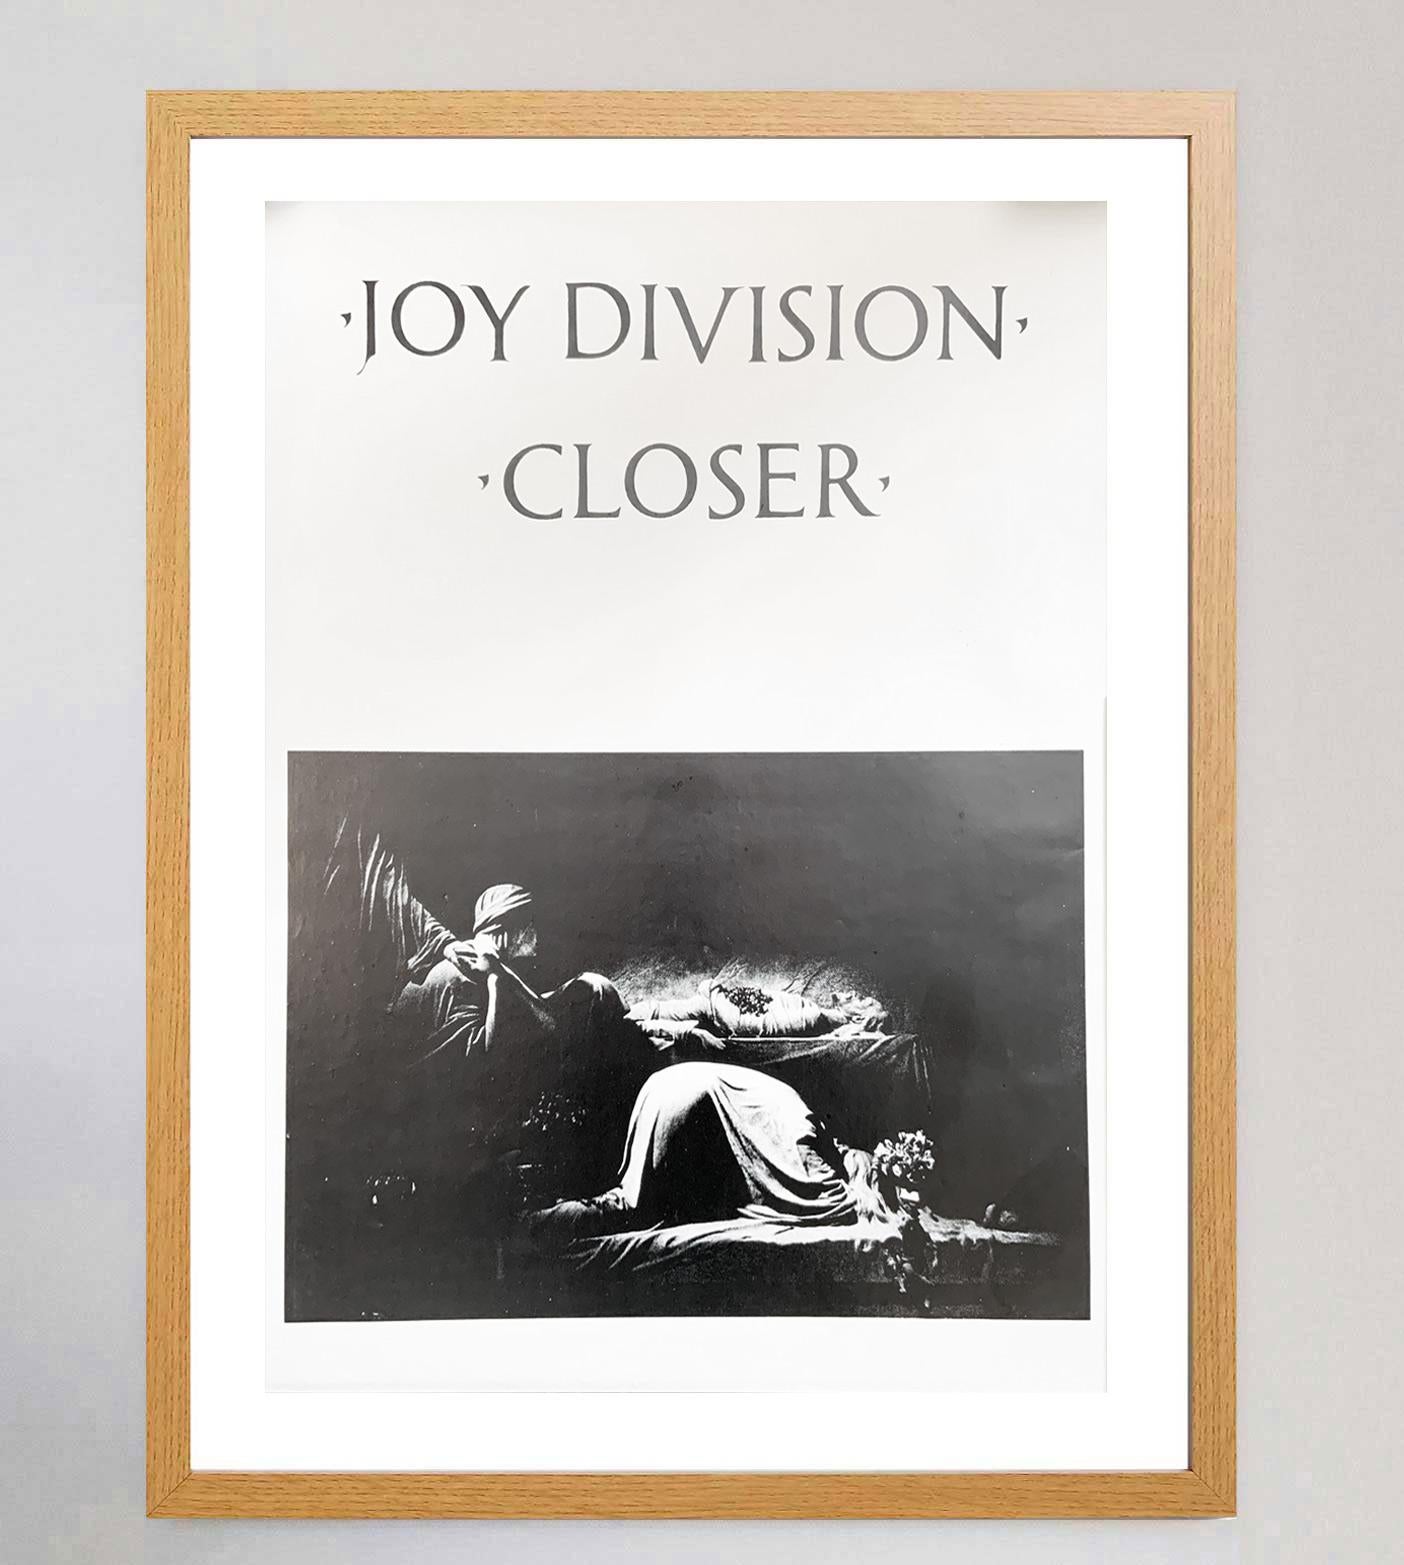 joy division closer album cover meaning